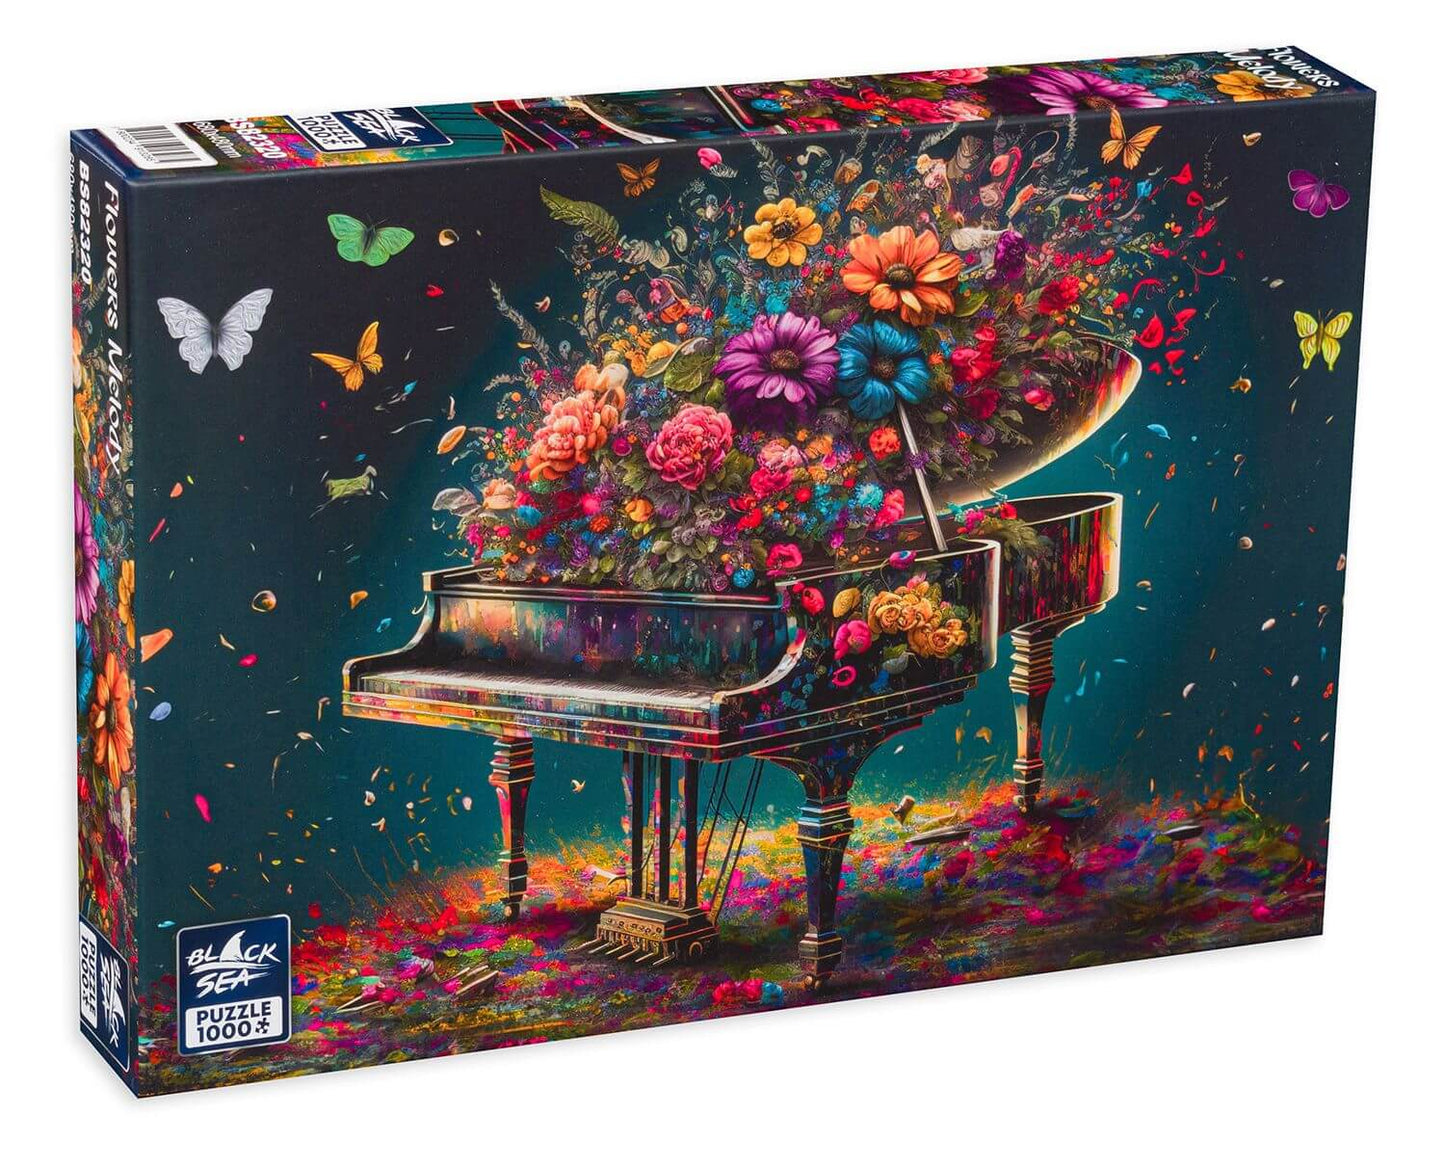 Puzzle Black Sea 1000 pieces - Flowers Melody